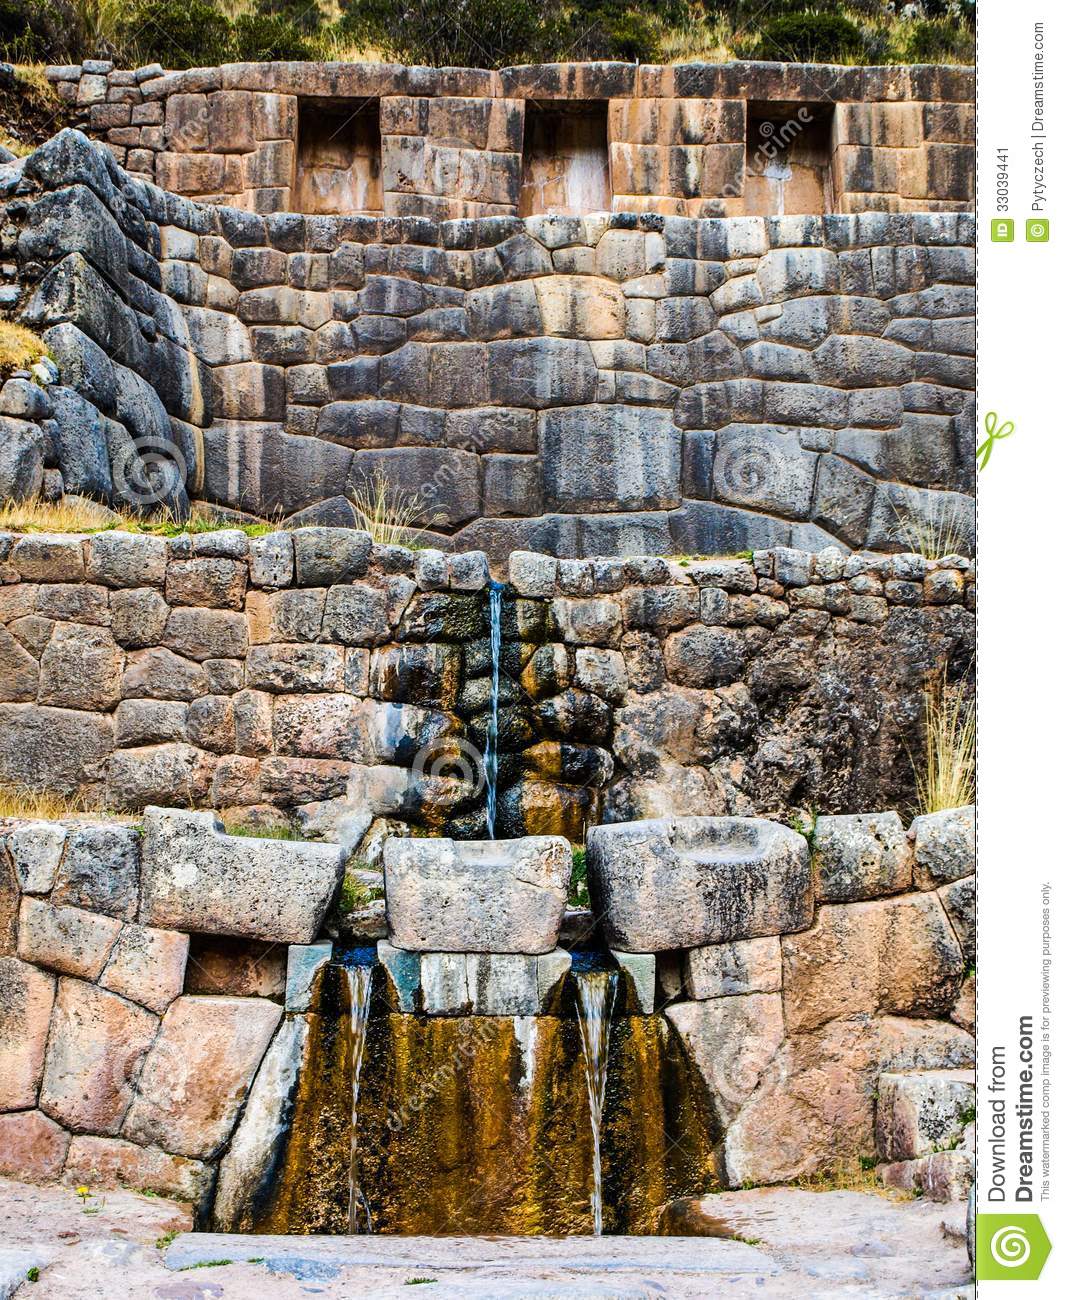 Inca S Bath   Tambomachay Stock Image   Image  33039441